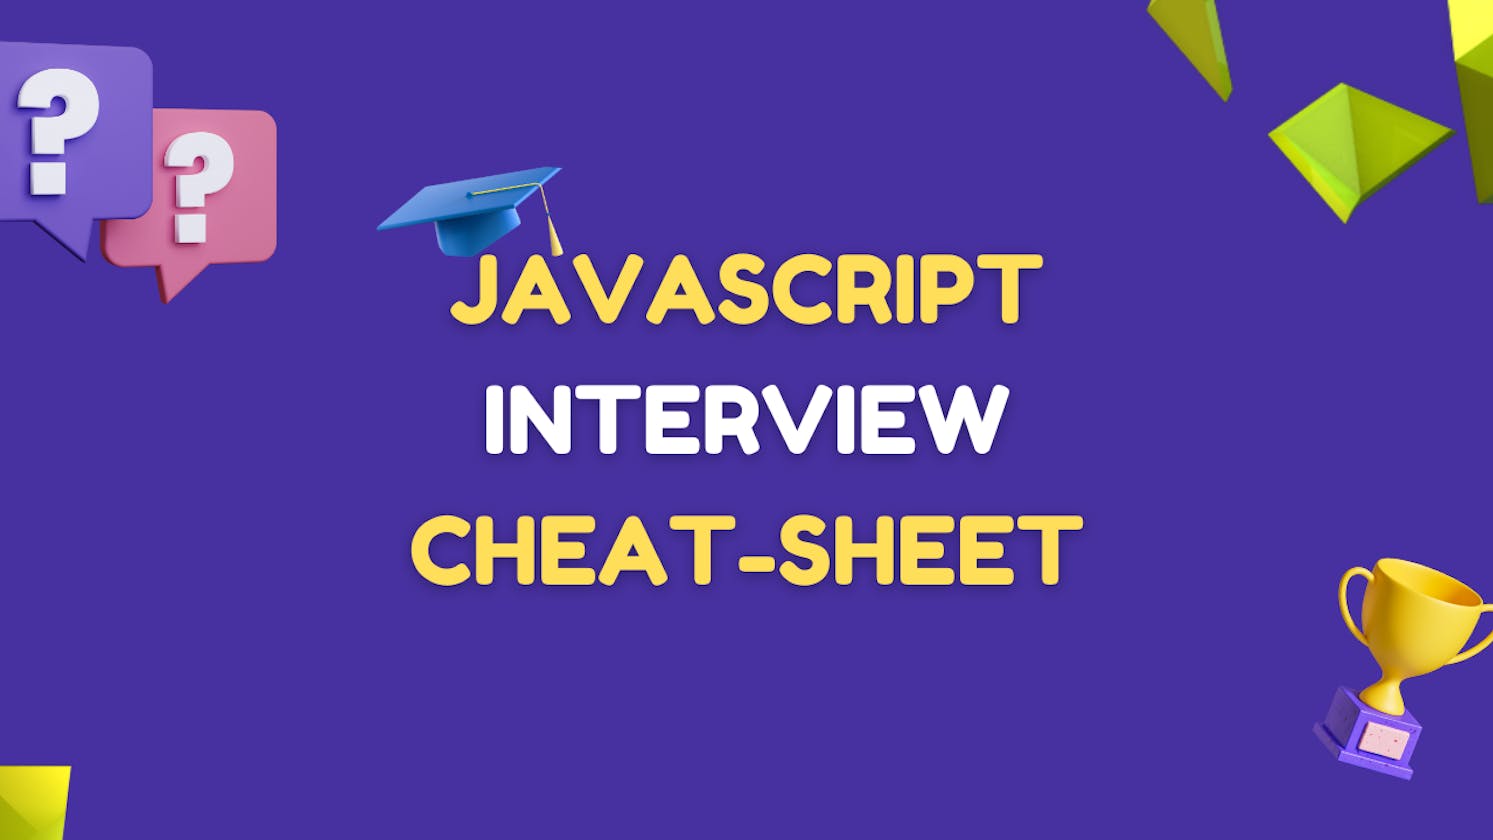 Javascript Interview Cheat-Sheet